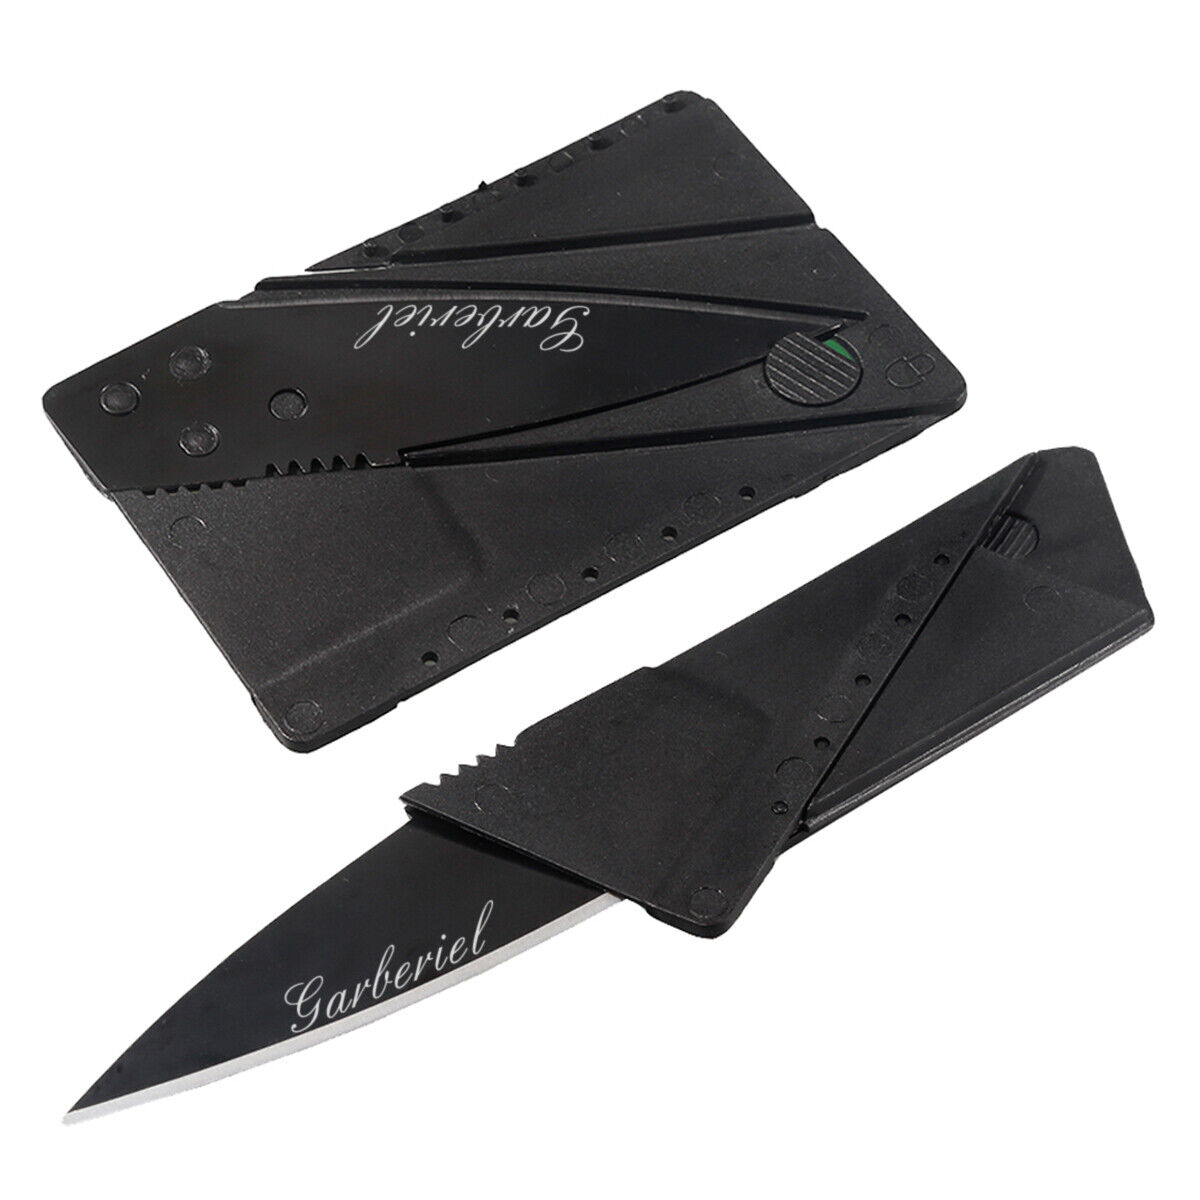 Lot 5-100Pack Credit Card Knives Folding Wallet Thin Pocket Survival Micro Knife